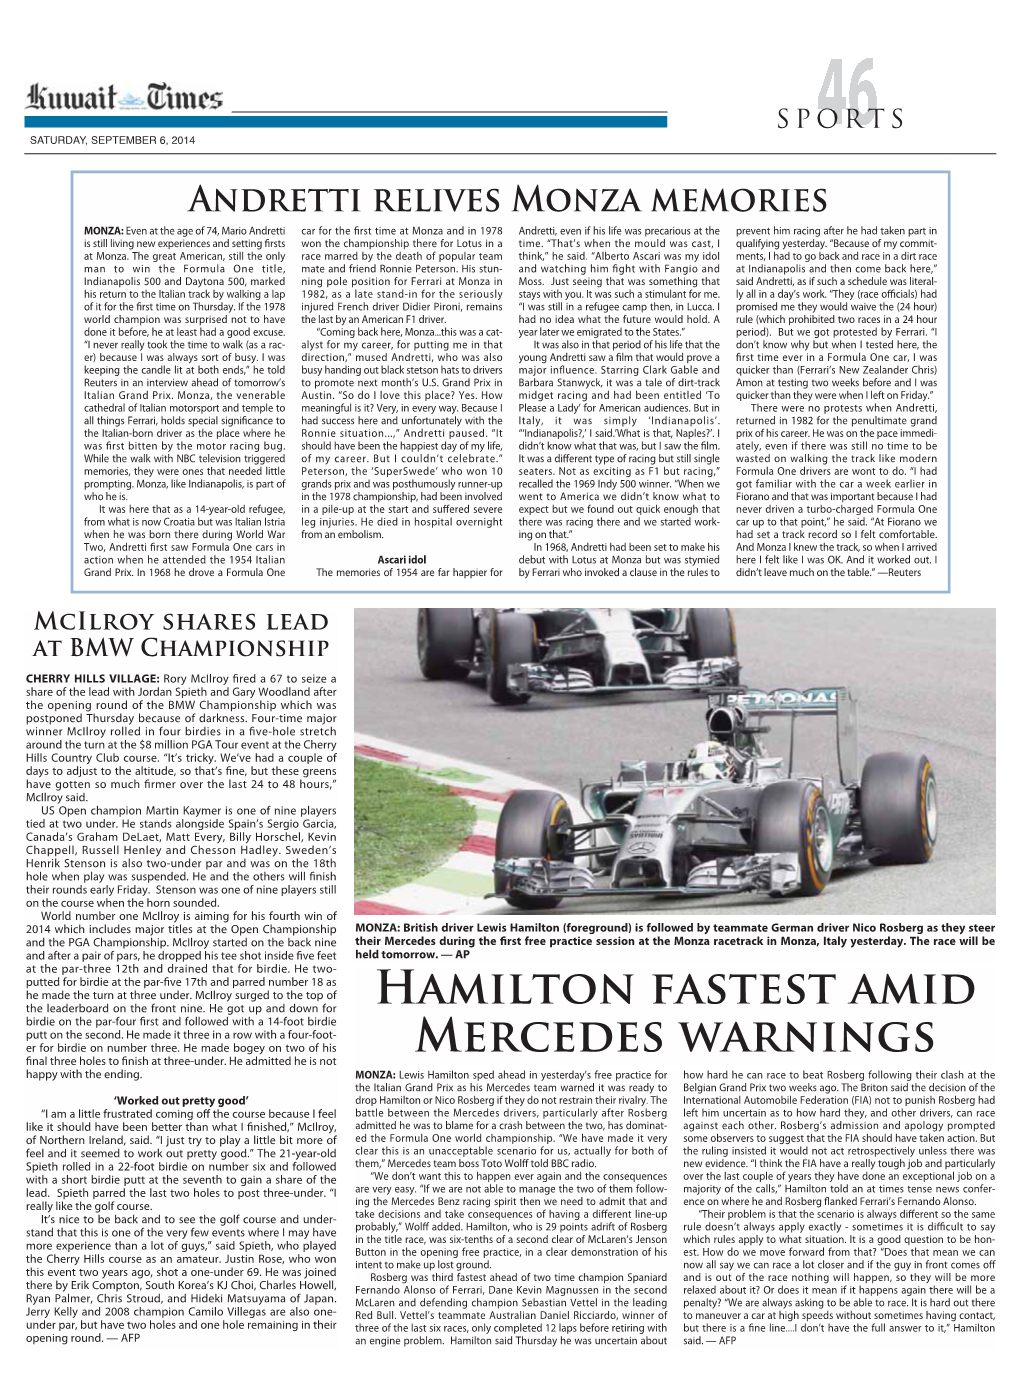 Hamilton Fastest Amid Mercedes Warnings